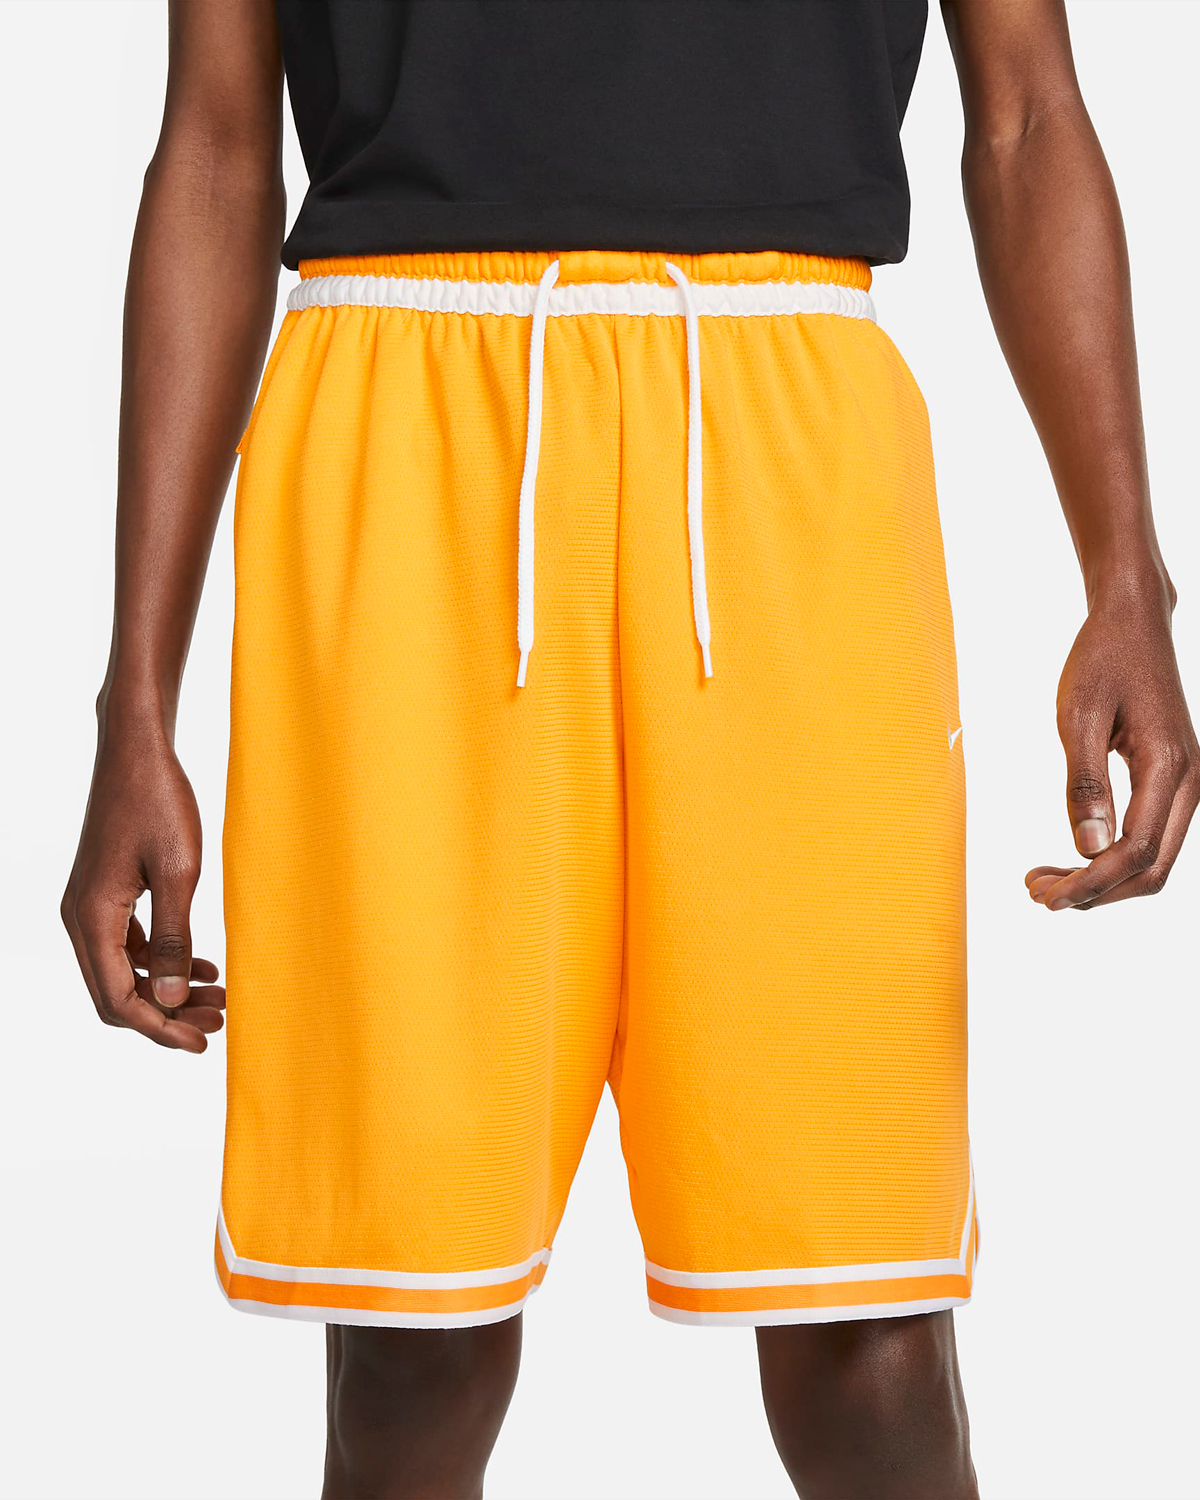 Nike-Dri-Fit-DNA-Basketball-Shorts-University-Gold